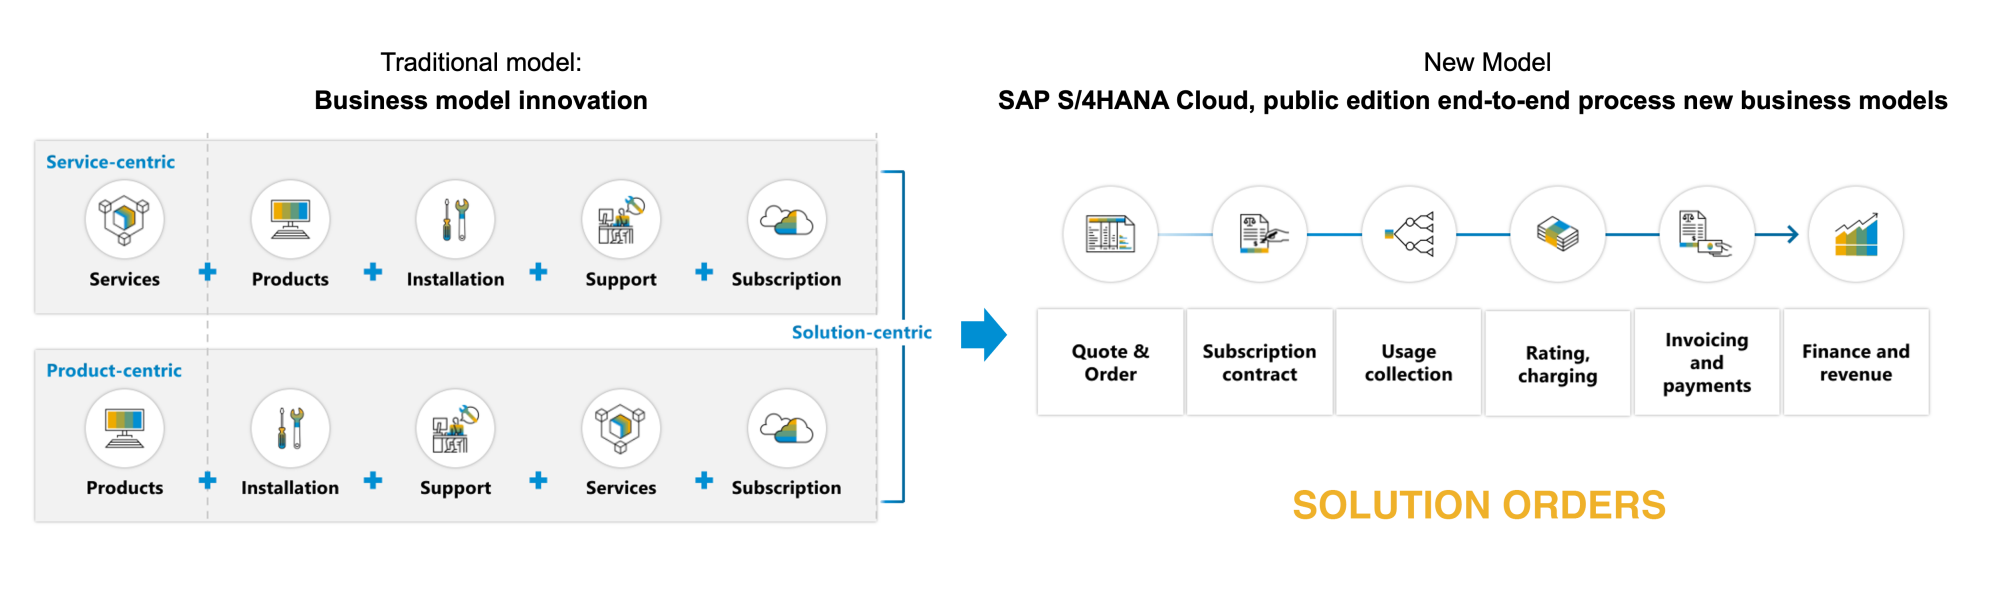 Solution Order Concept binnen SAP S/4HANA Cloud, Public Edition